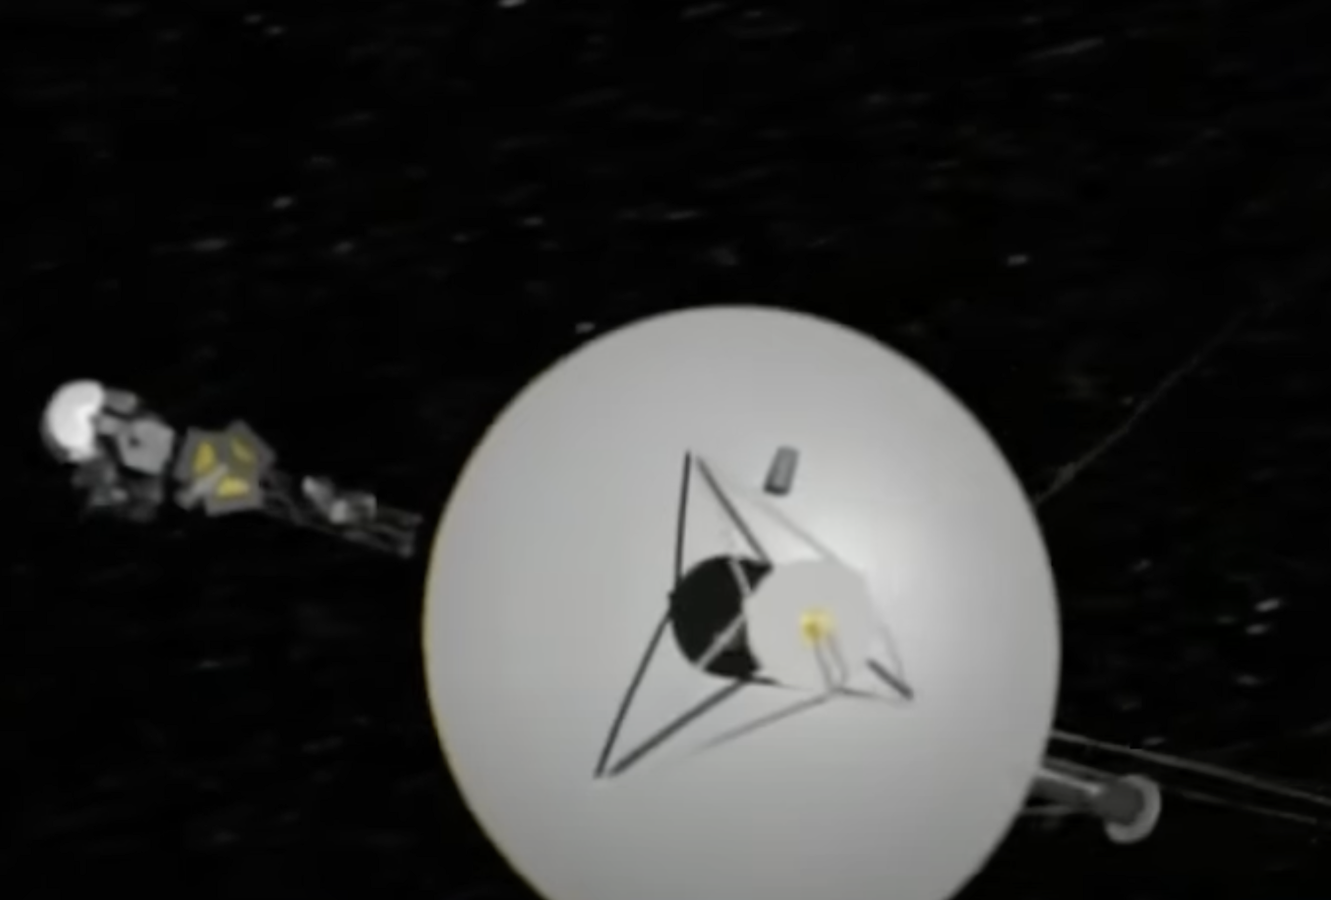  NASA uhvatila signal letilice Vojadžer 2 